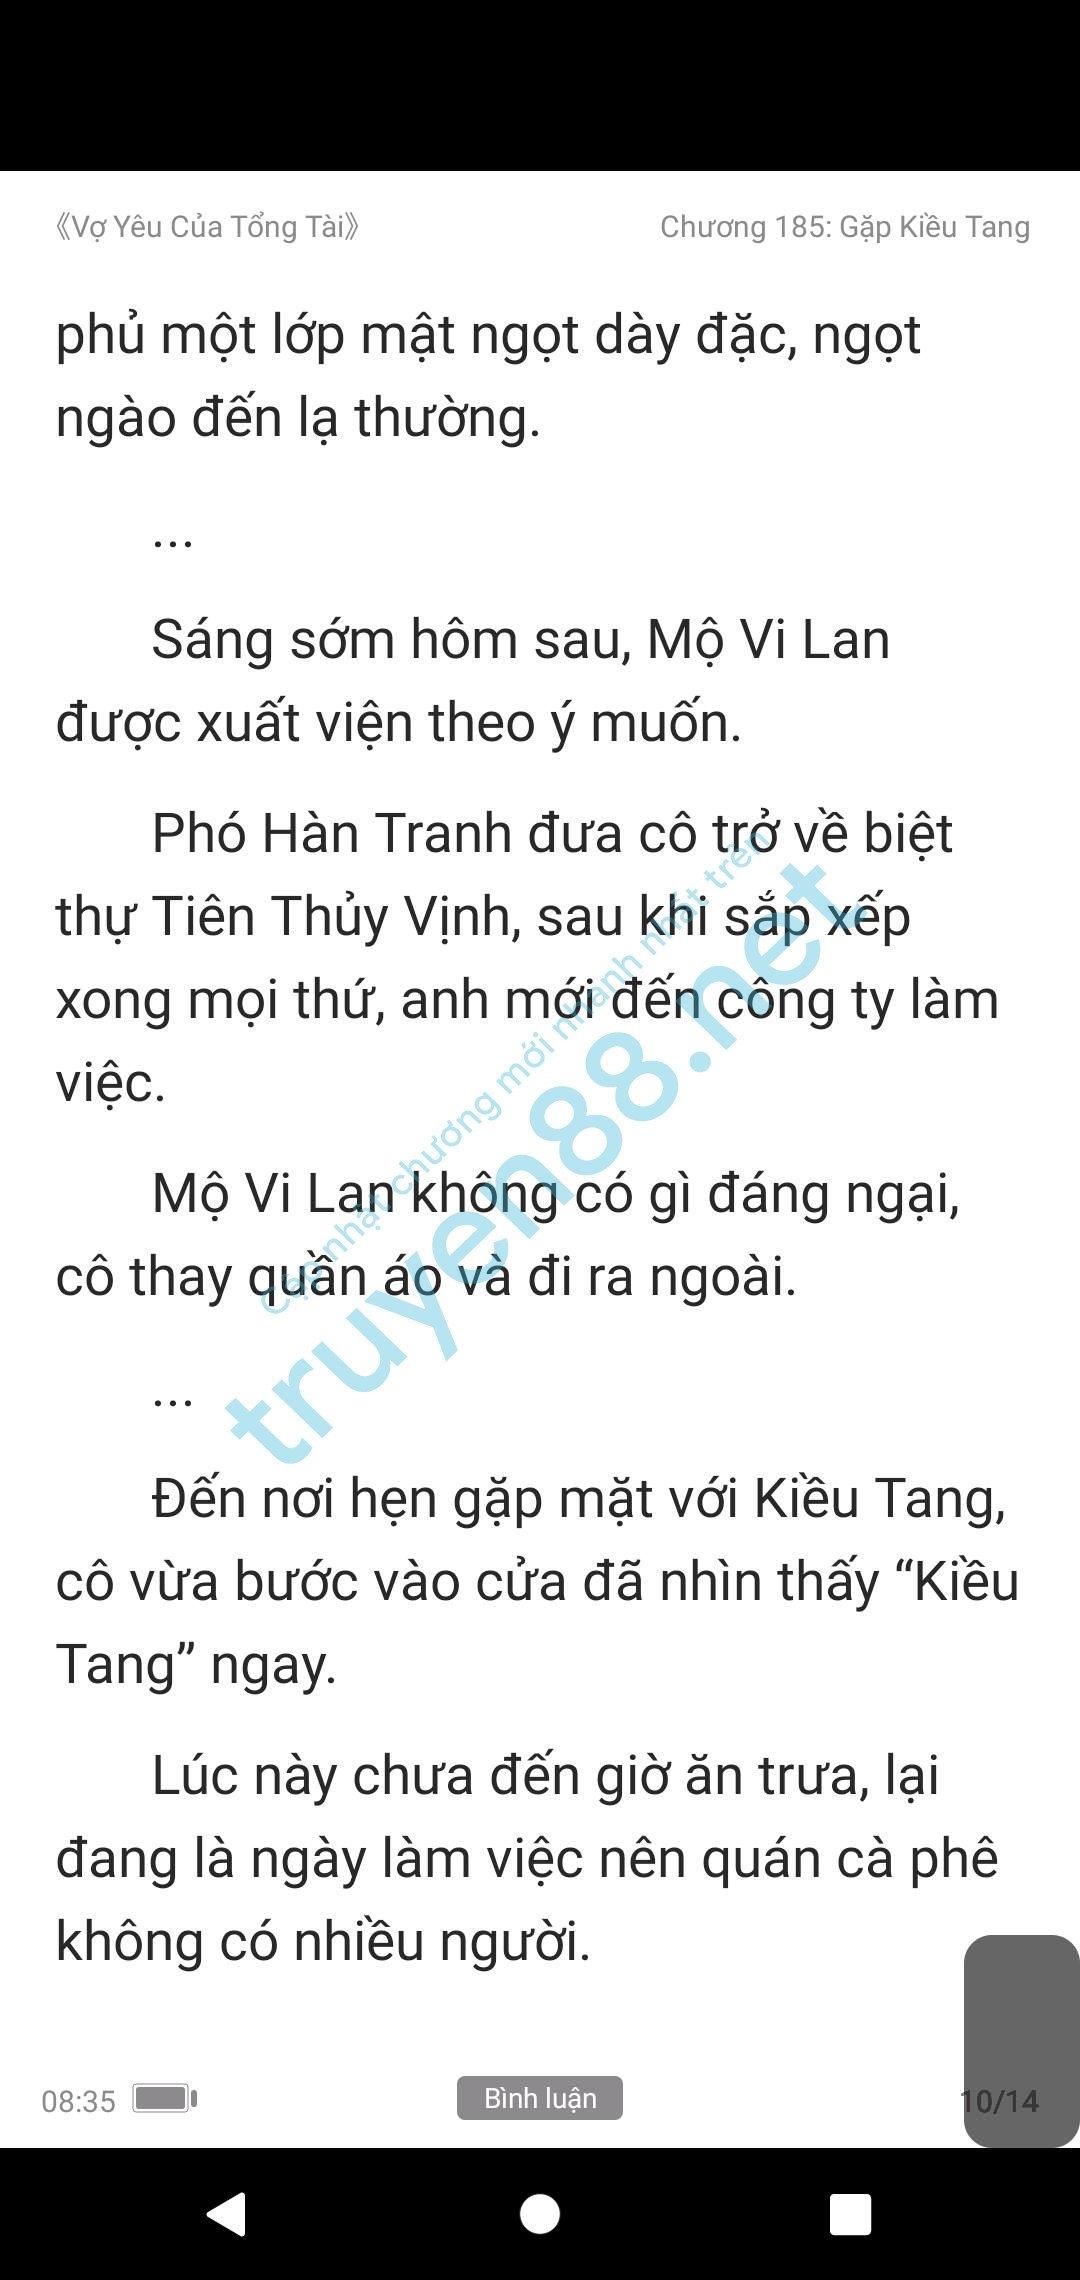 vo-yeu-cua-tong-tai-mo-vi-lan--pho-han-tranh-185-0